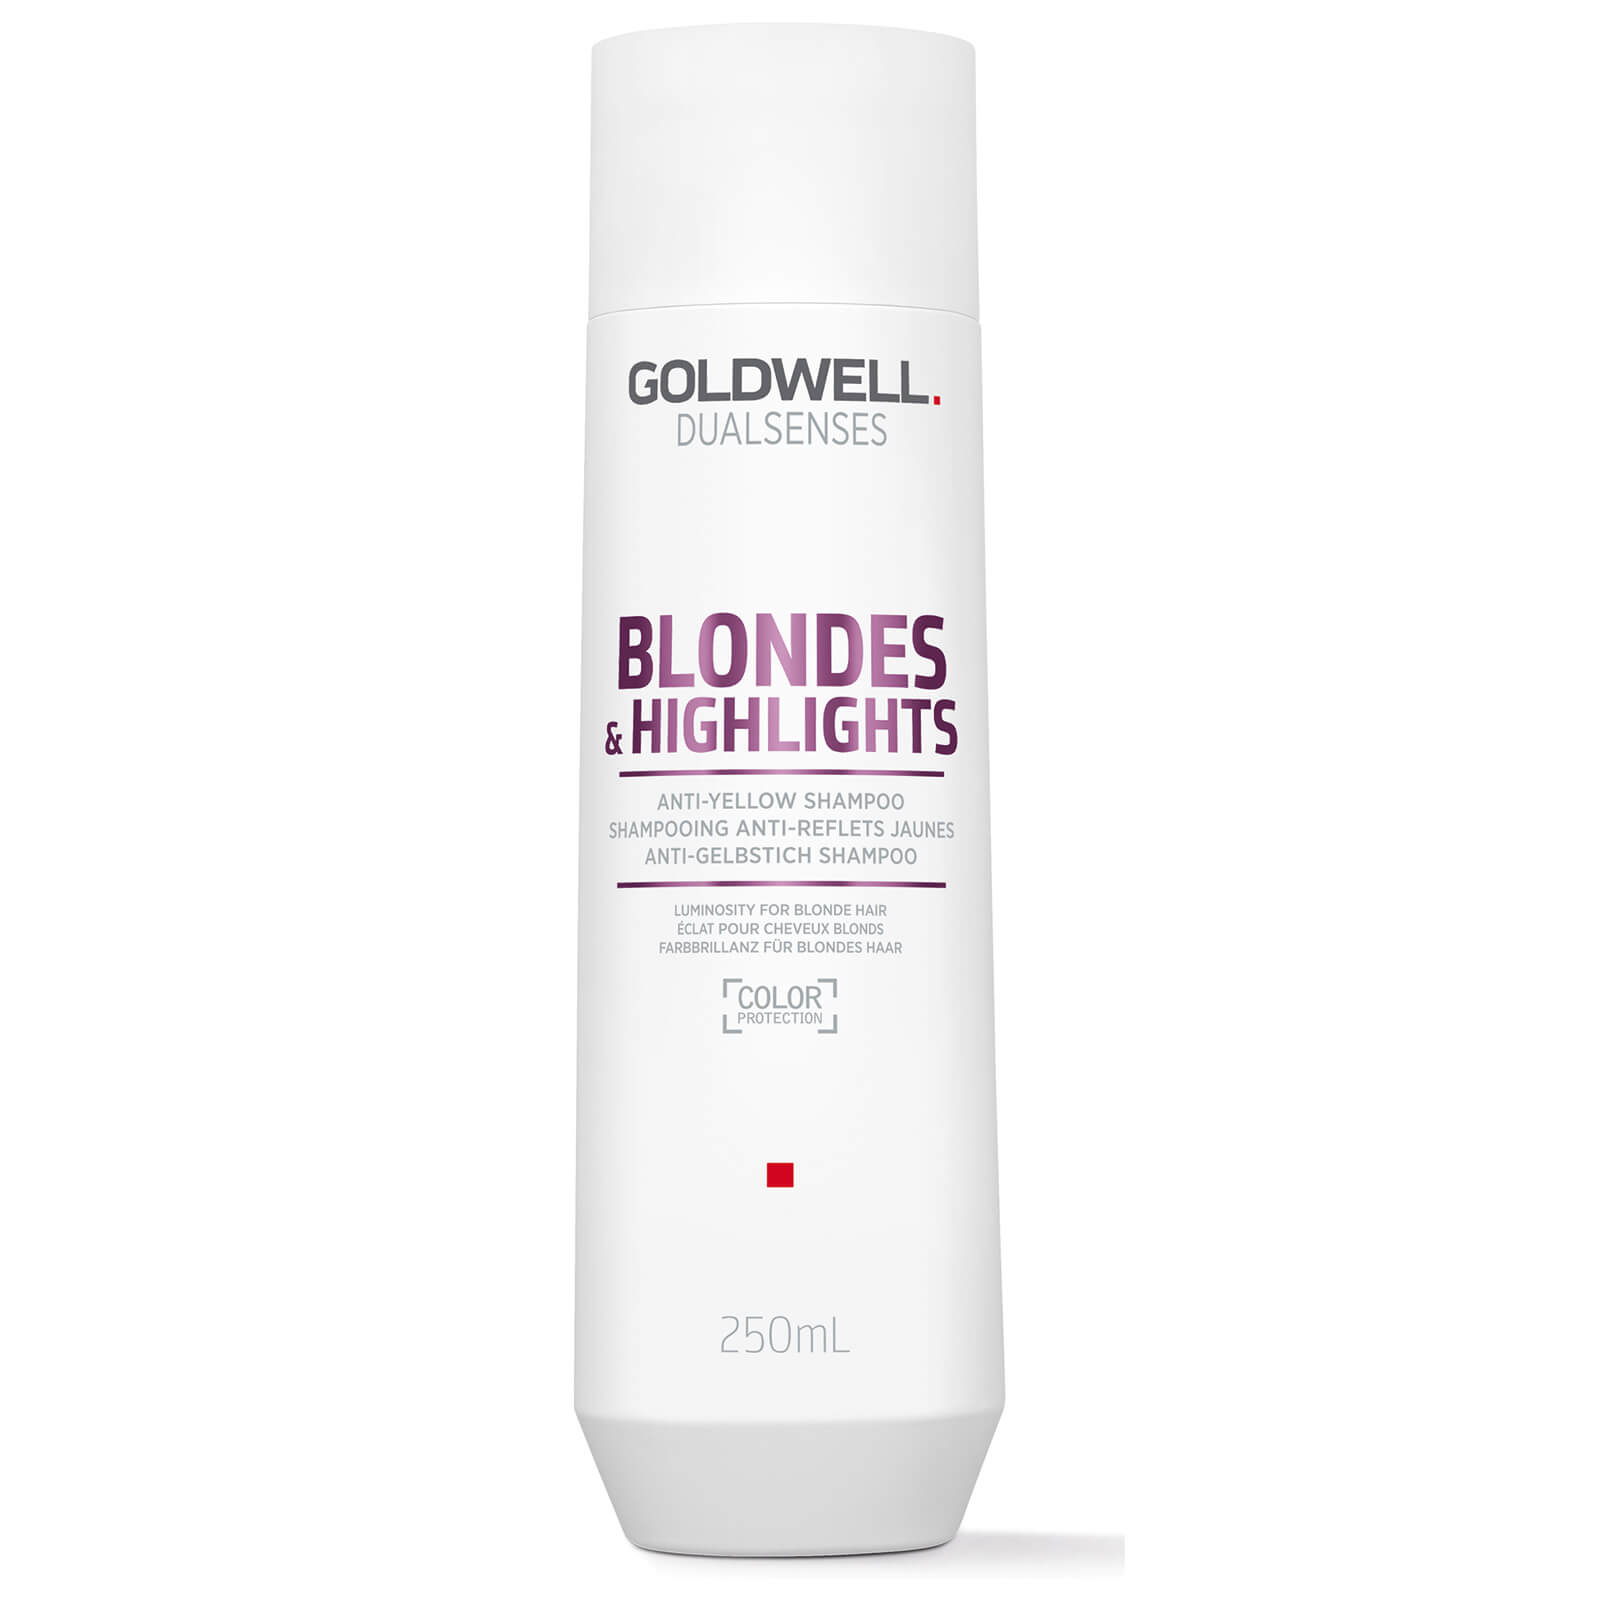 Goldwell Blondes & Highlights Anti Yellow Shampoo 250ml